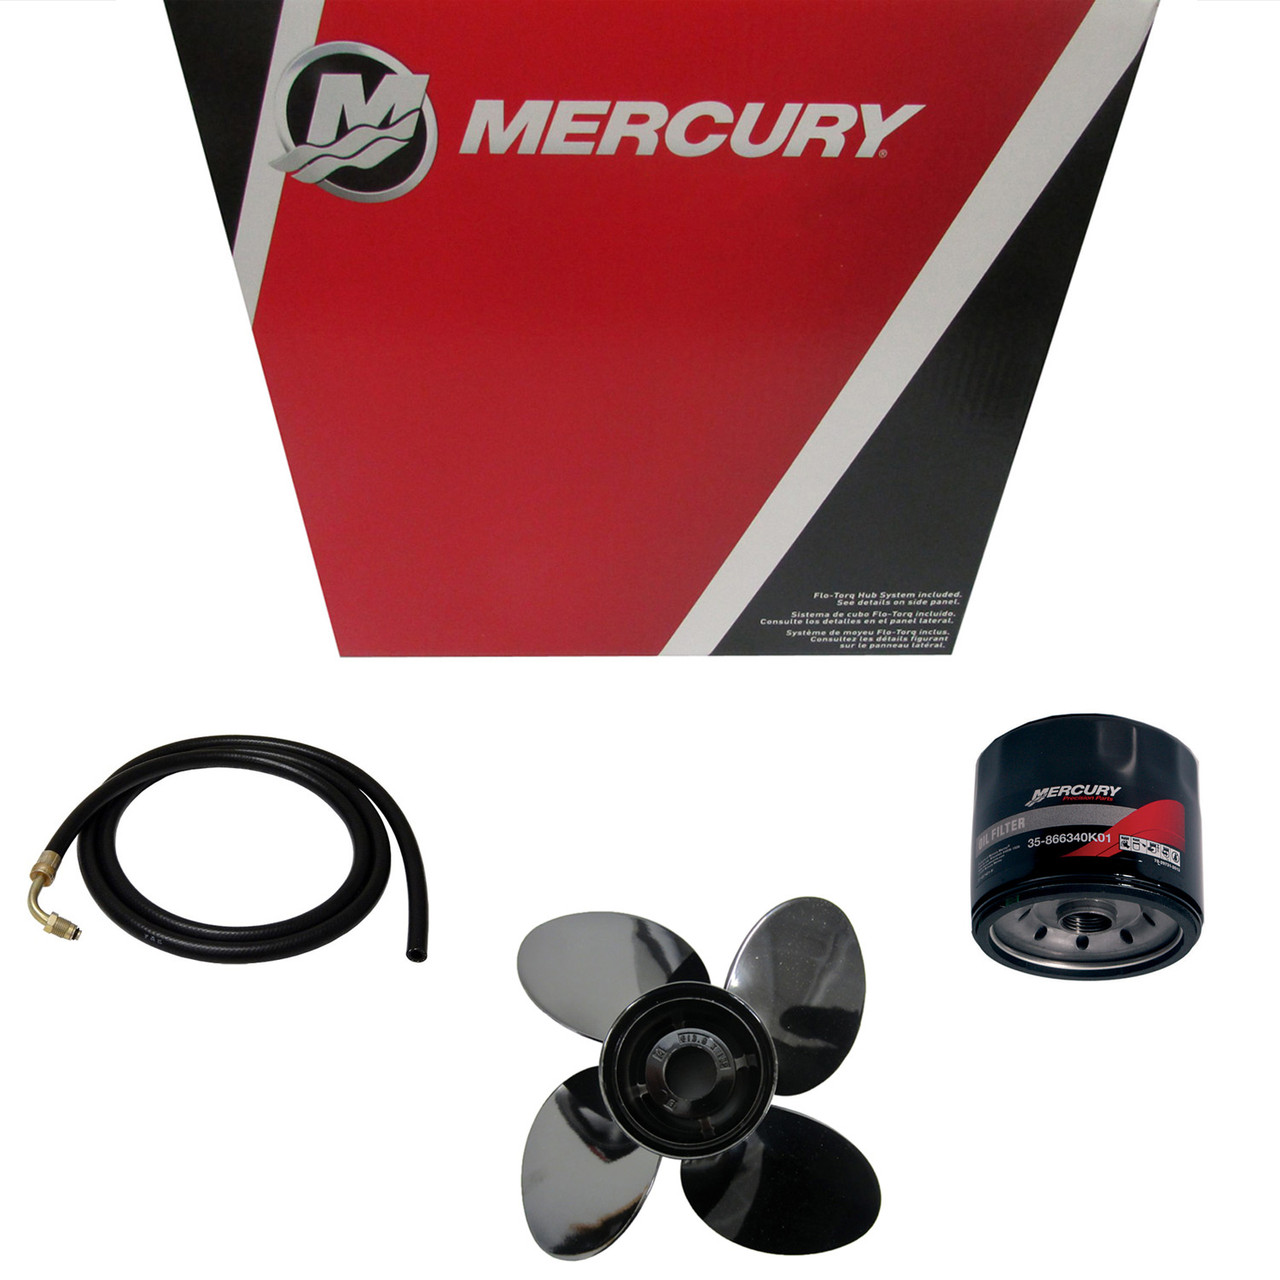 Mercury Marine / Mercruiser New OEM Sensor Assy-Ign, 87-892150K02